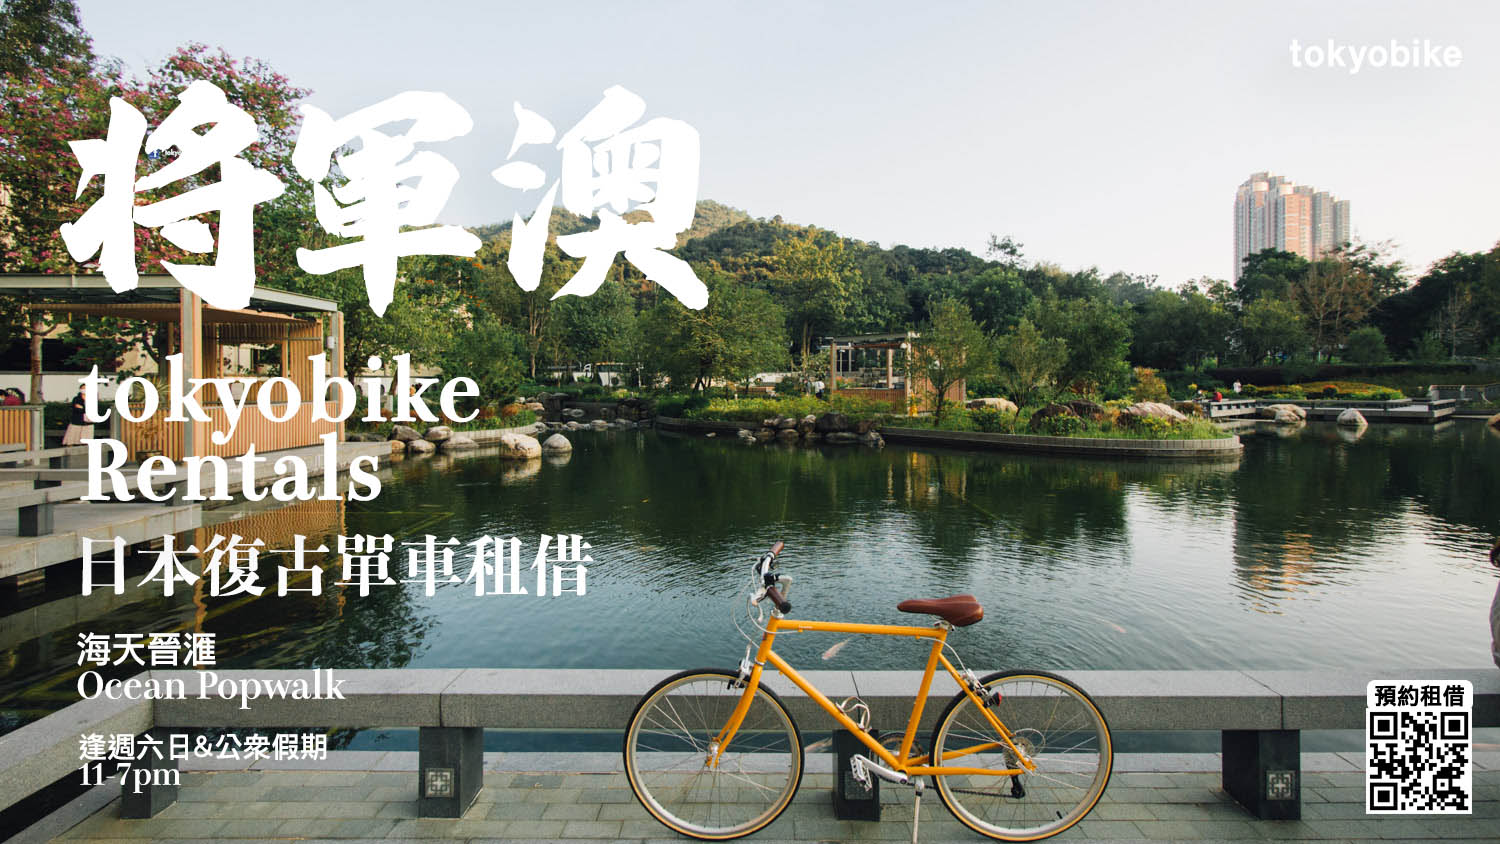 tokyobike Rental @ 將軍澳 btm website cover tko rental